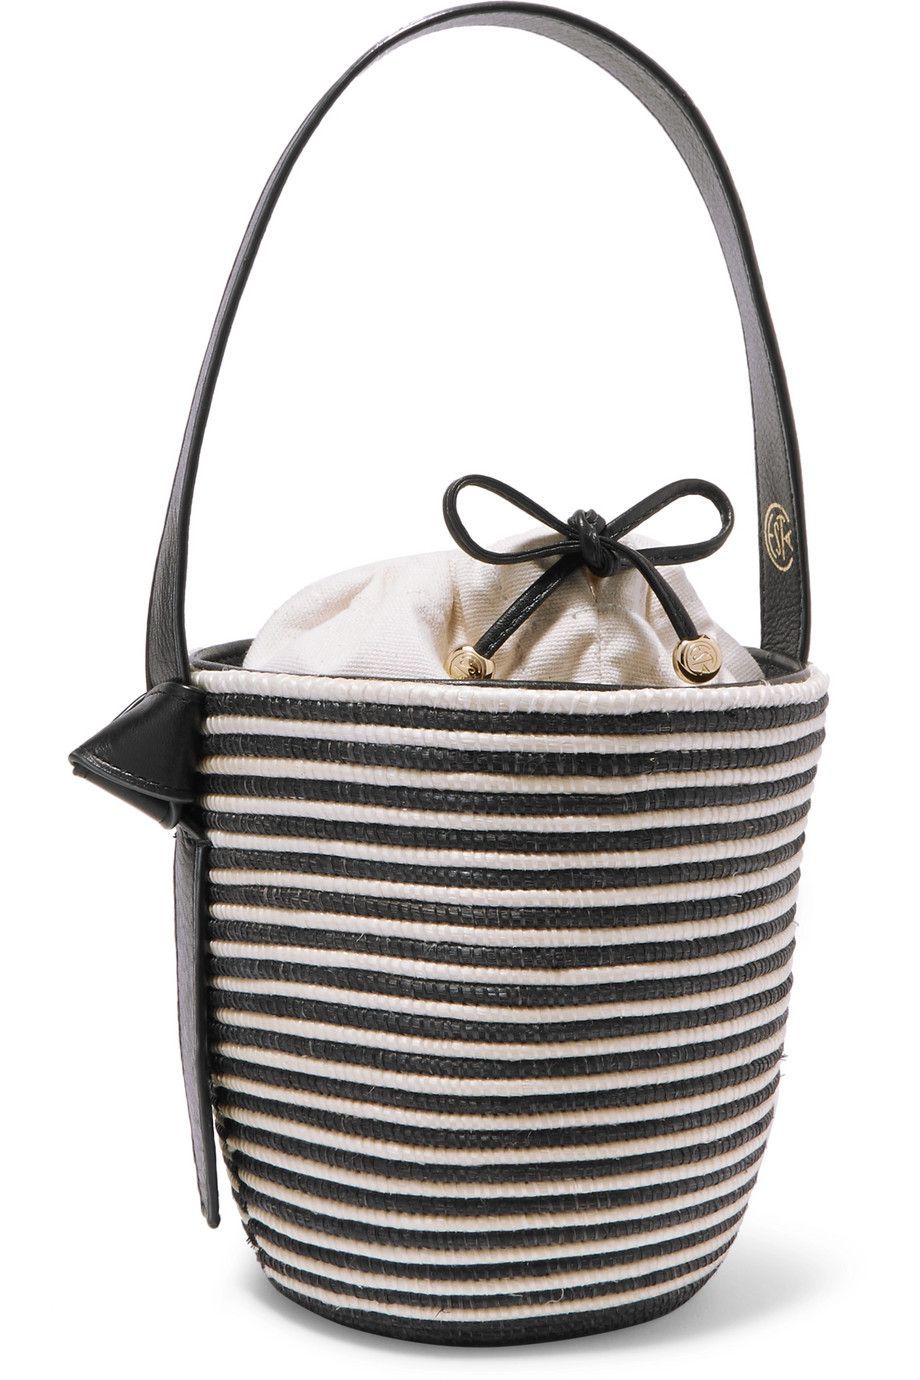 Basket, Storage basket, Footwear, Picnic basket, Hamper, Beige, Gift basket, Wicker, Flower girl basket, Home accessories, 